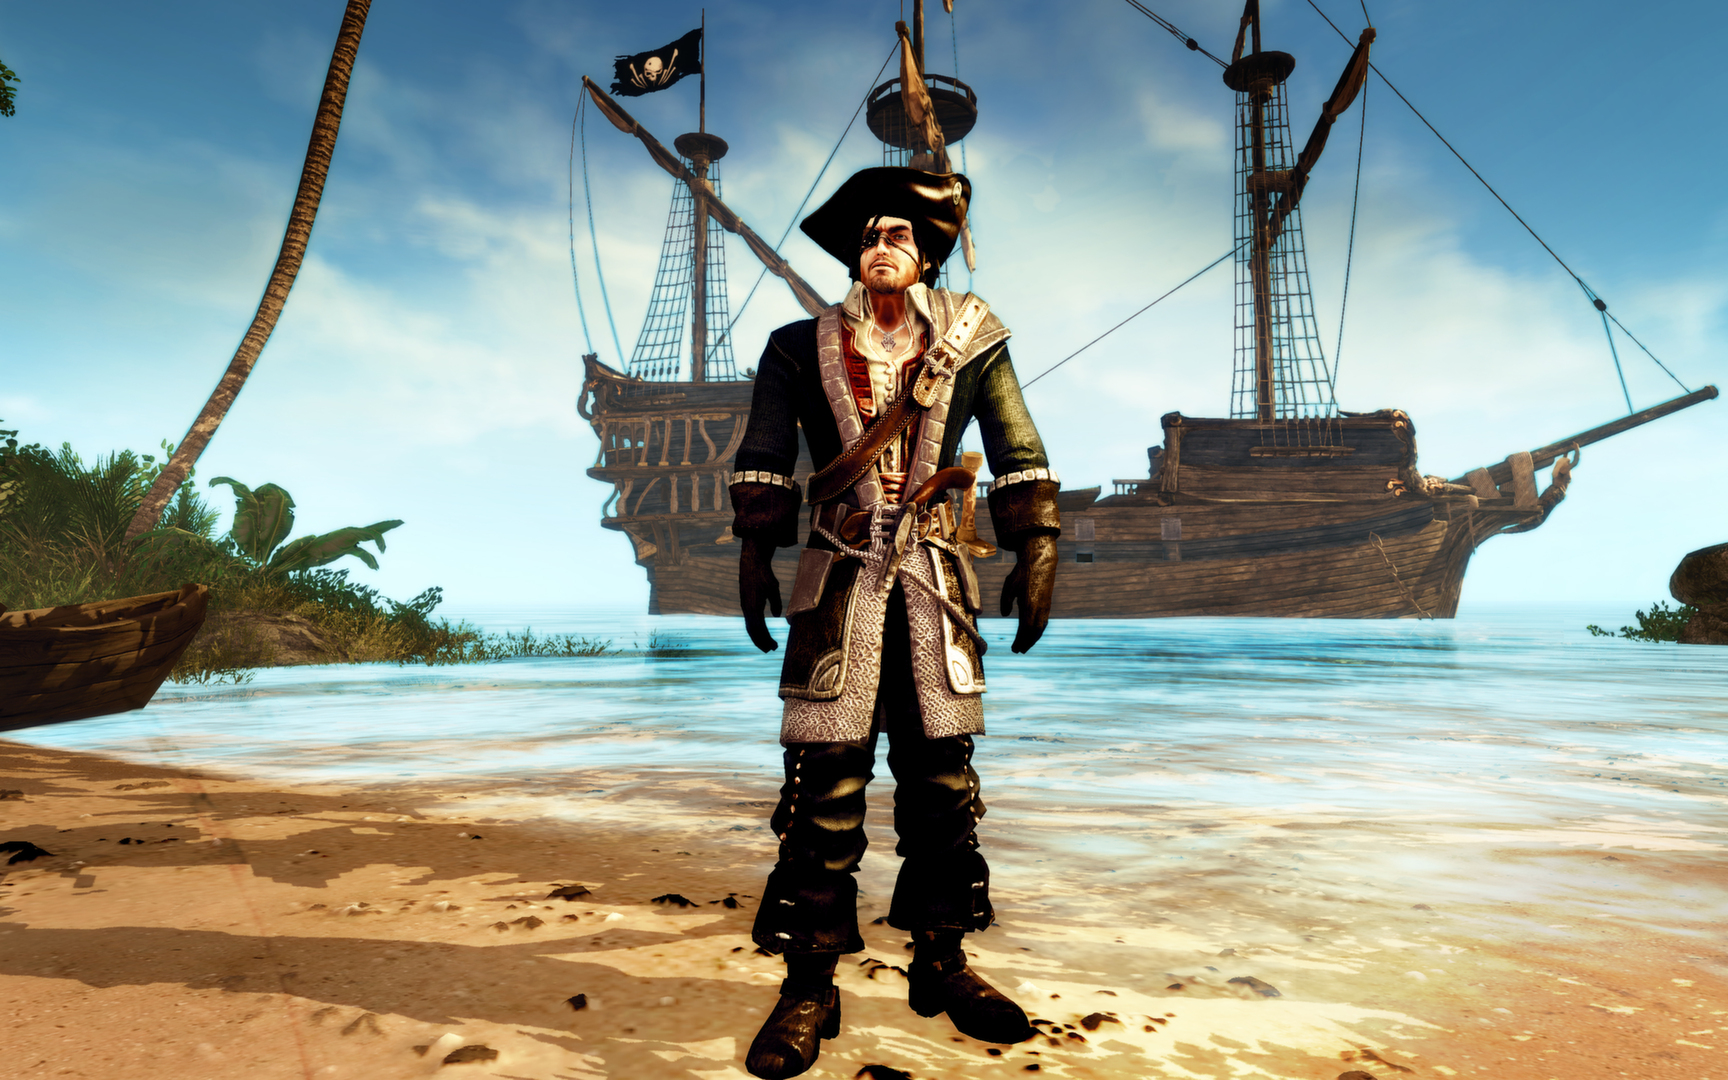 Risen 2: Dark Waters - A Pirate's Clothes DLC Featured Screenshot #1